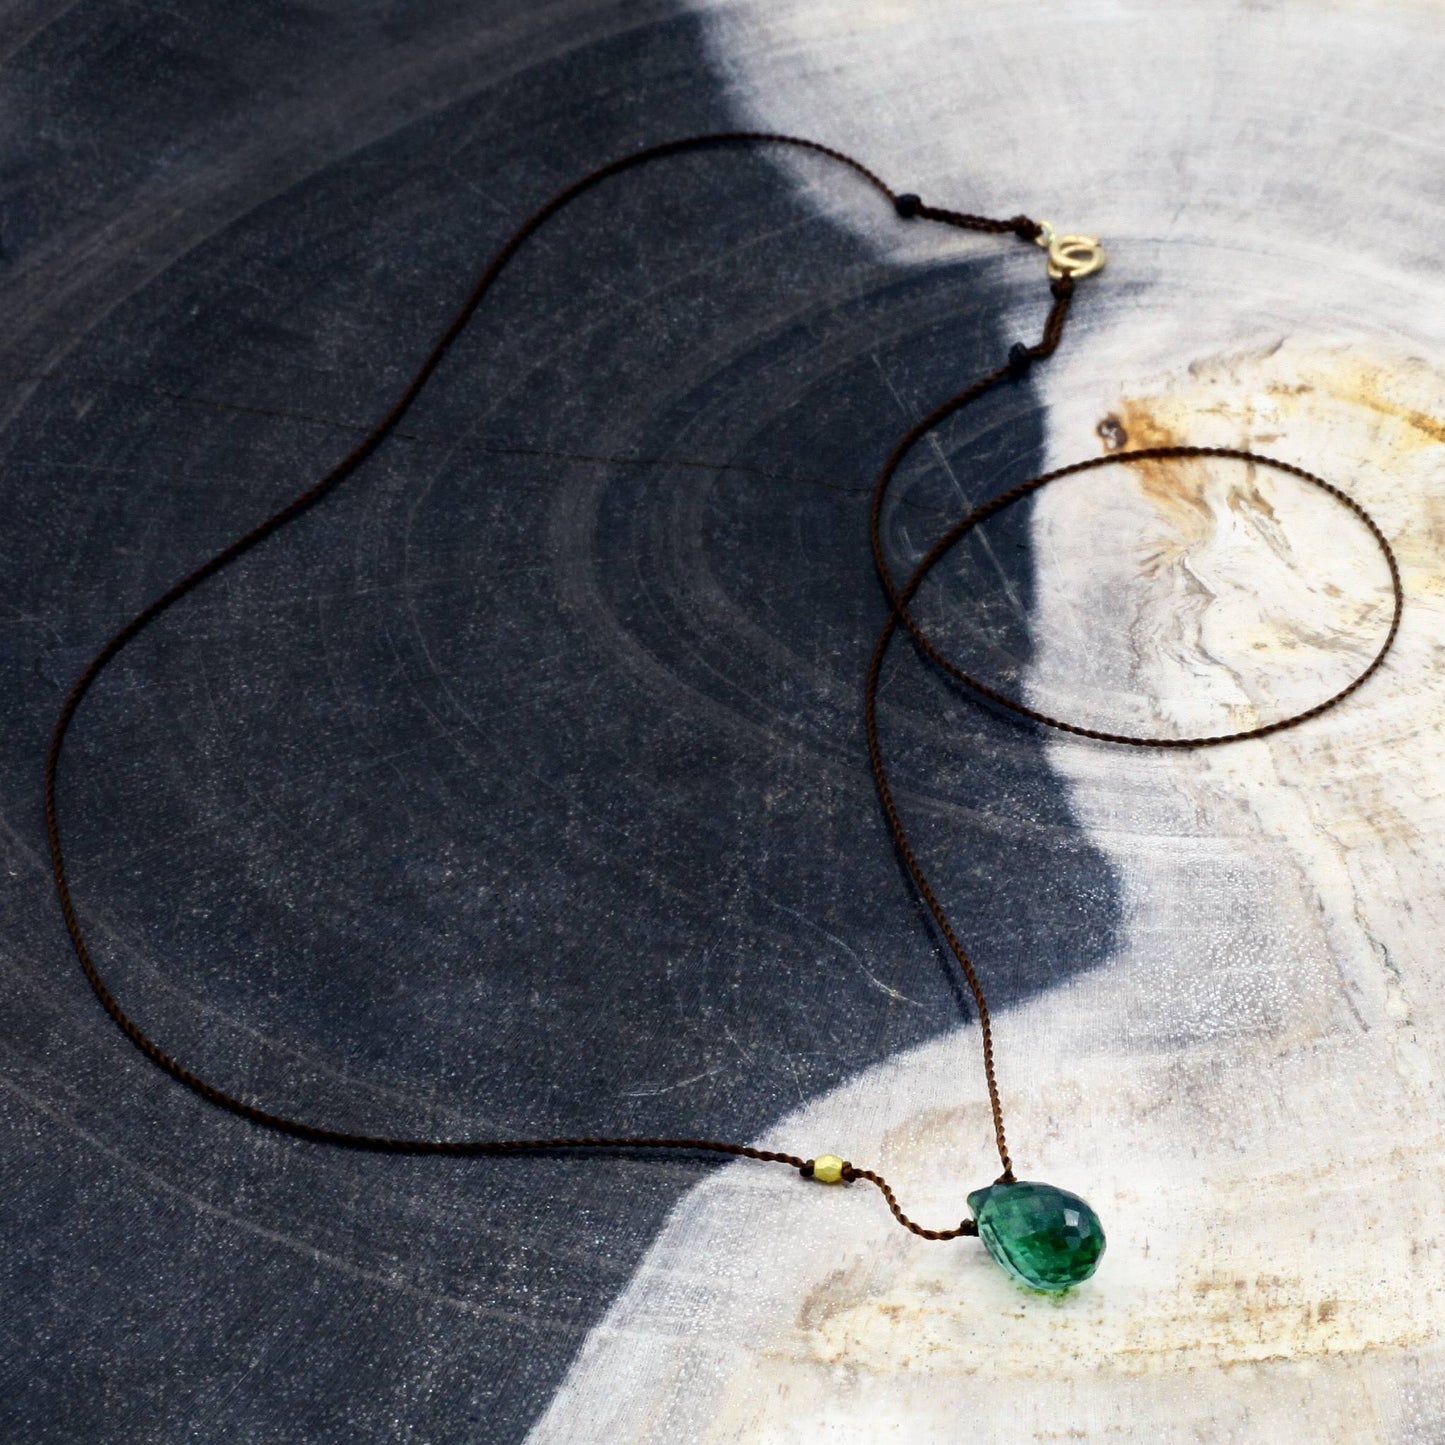 Margaret Solow Jewelry | Tourmaline "Zen Gem" Necklace | Firecracker